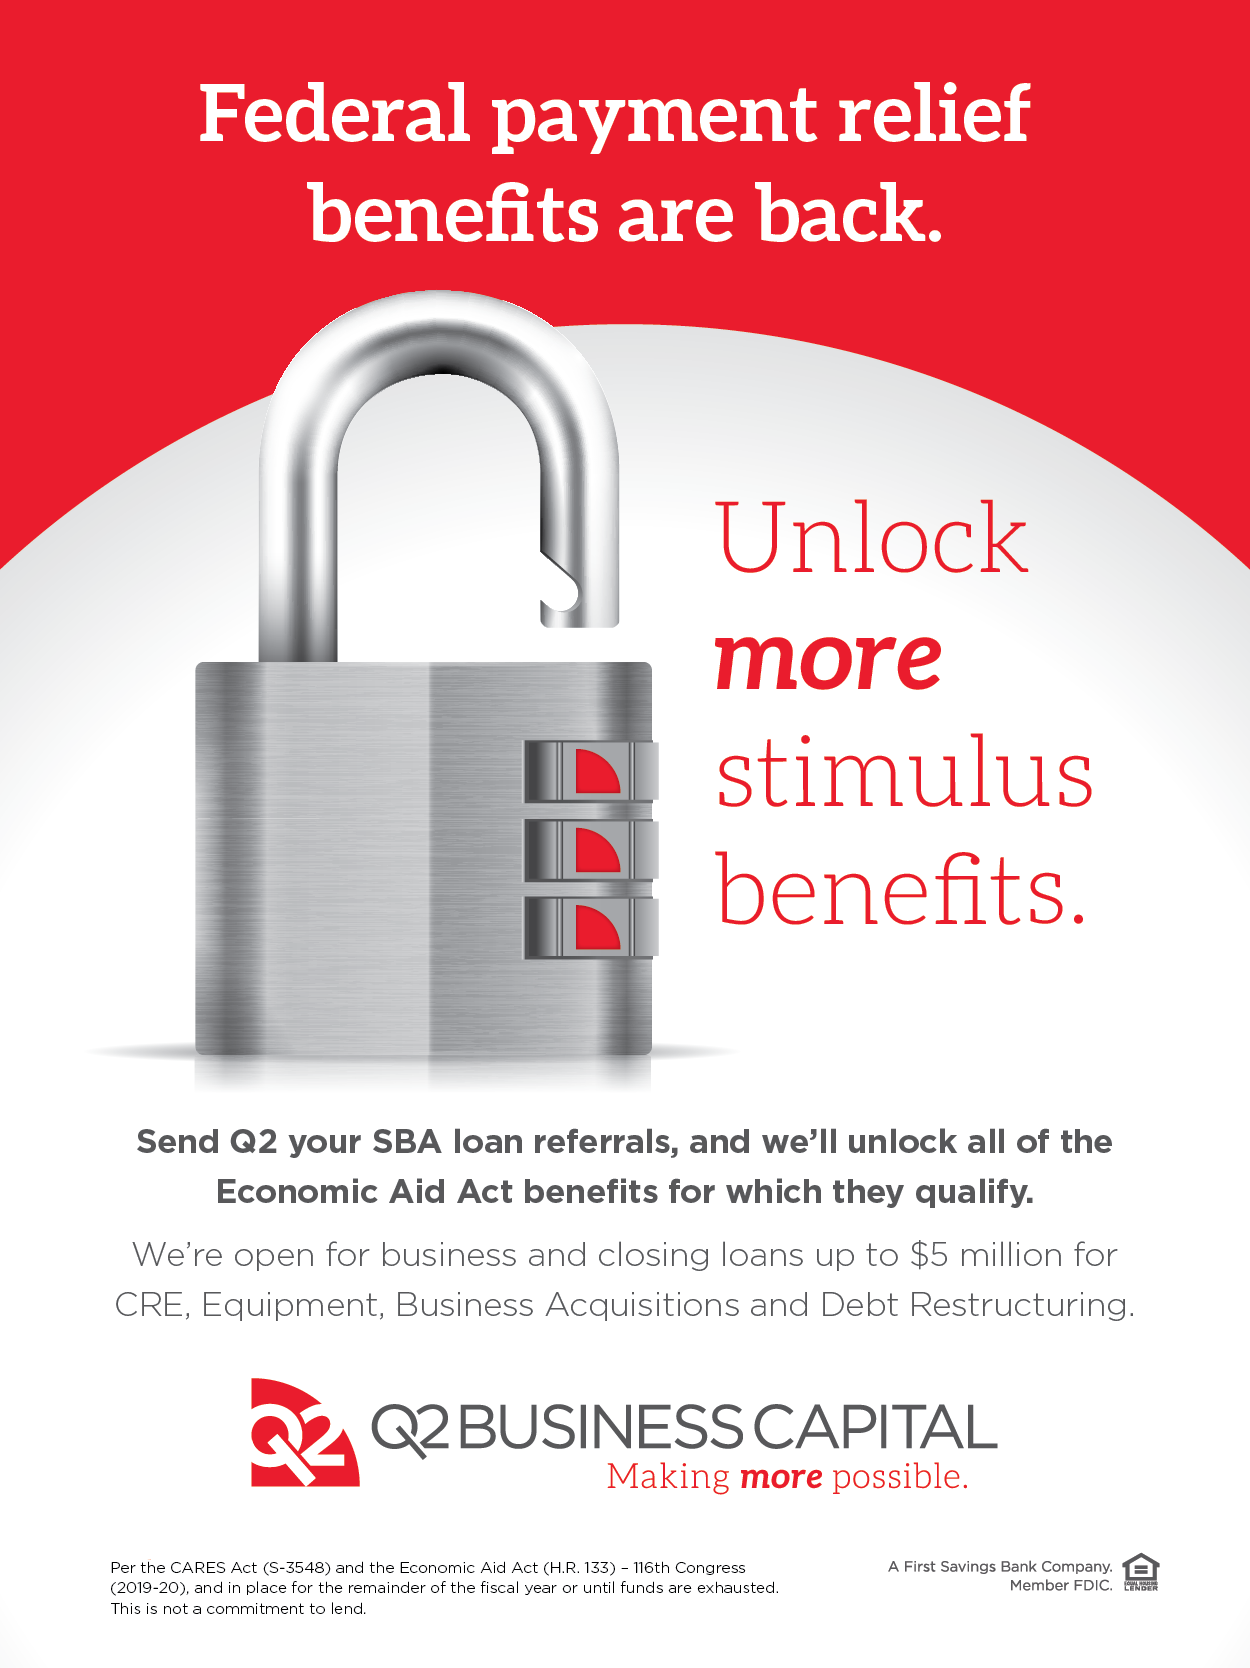 Unlock more stimulus benefits